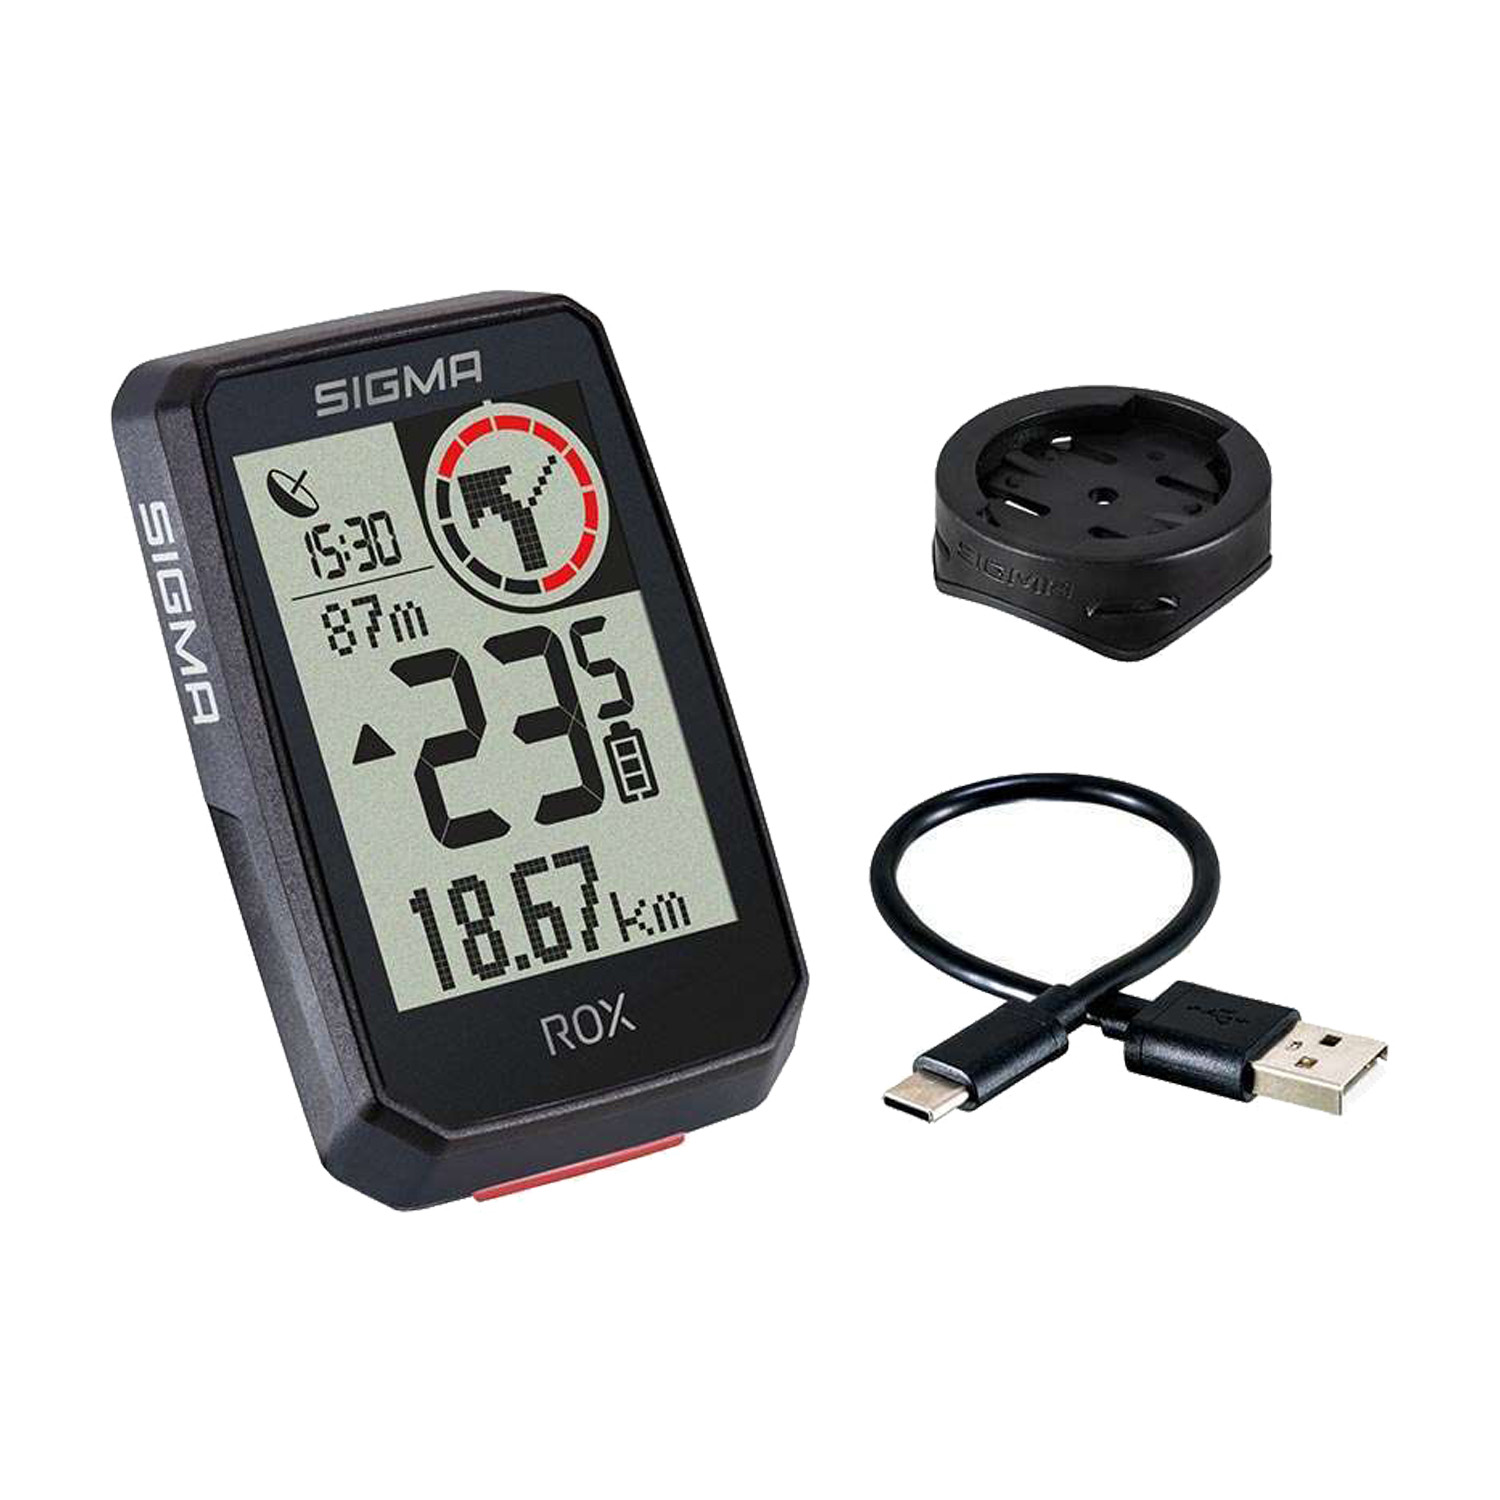 Sigma ROX 2.0 GPS/ fietscomputer